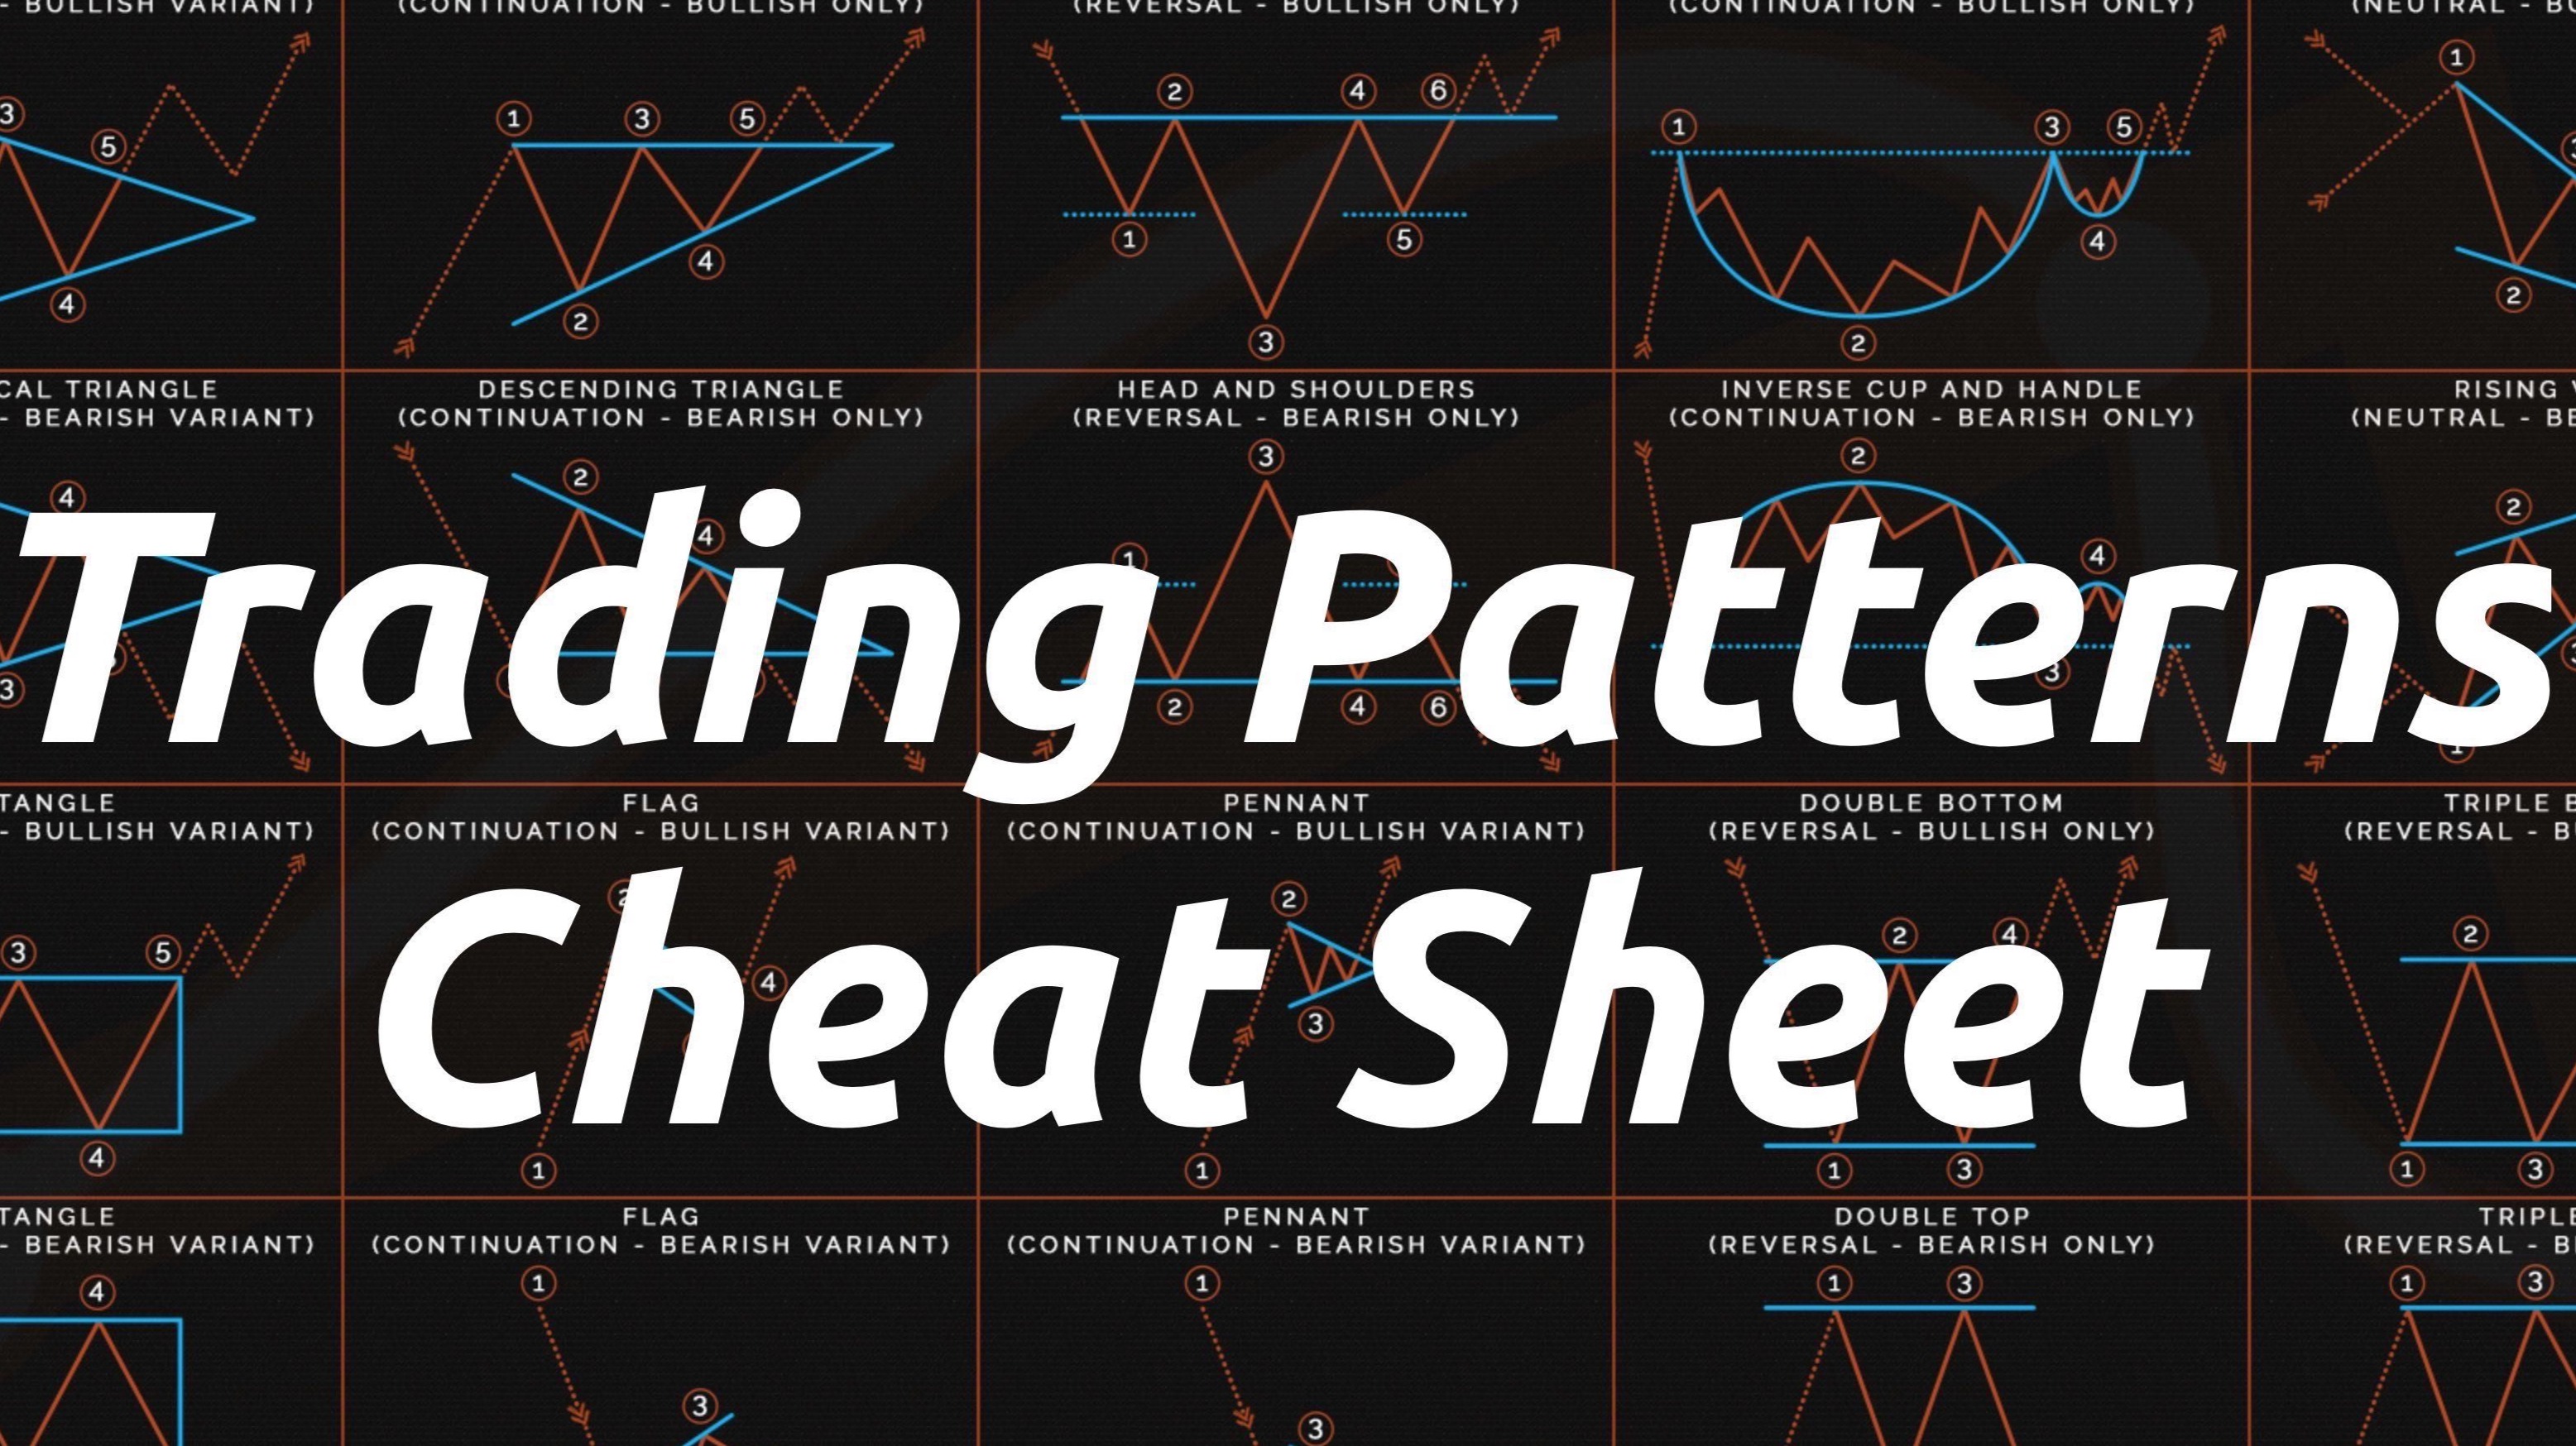 Chart Patterns PDF Free Download